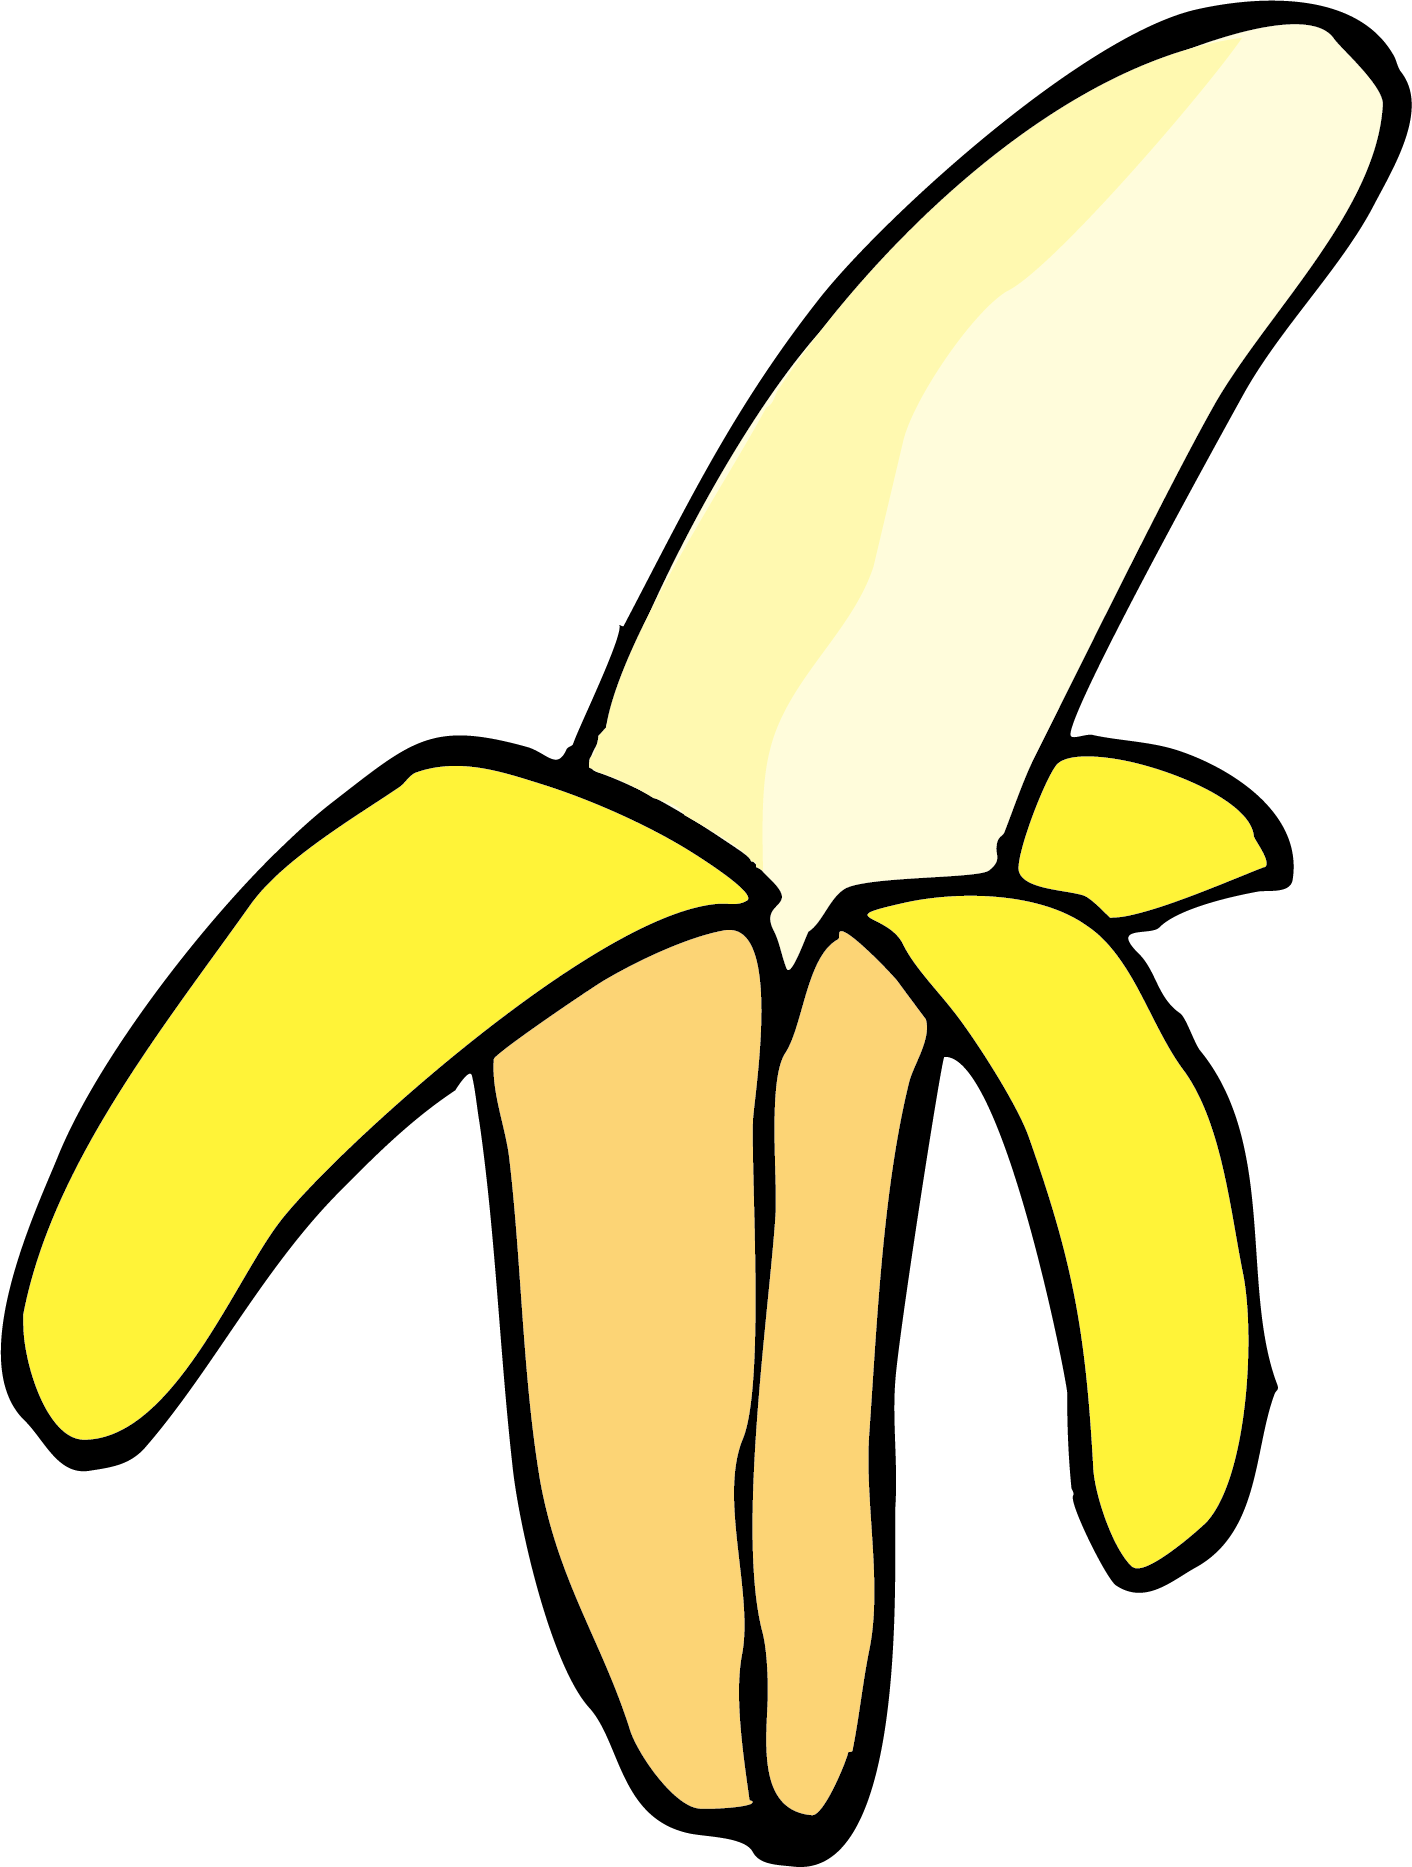 Fruit Cartoon Banana Cake Clip Art - Fruit Cartoon Banana Cake Clip Art (1412x1867)